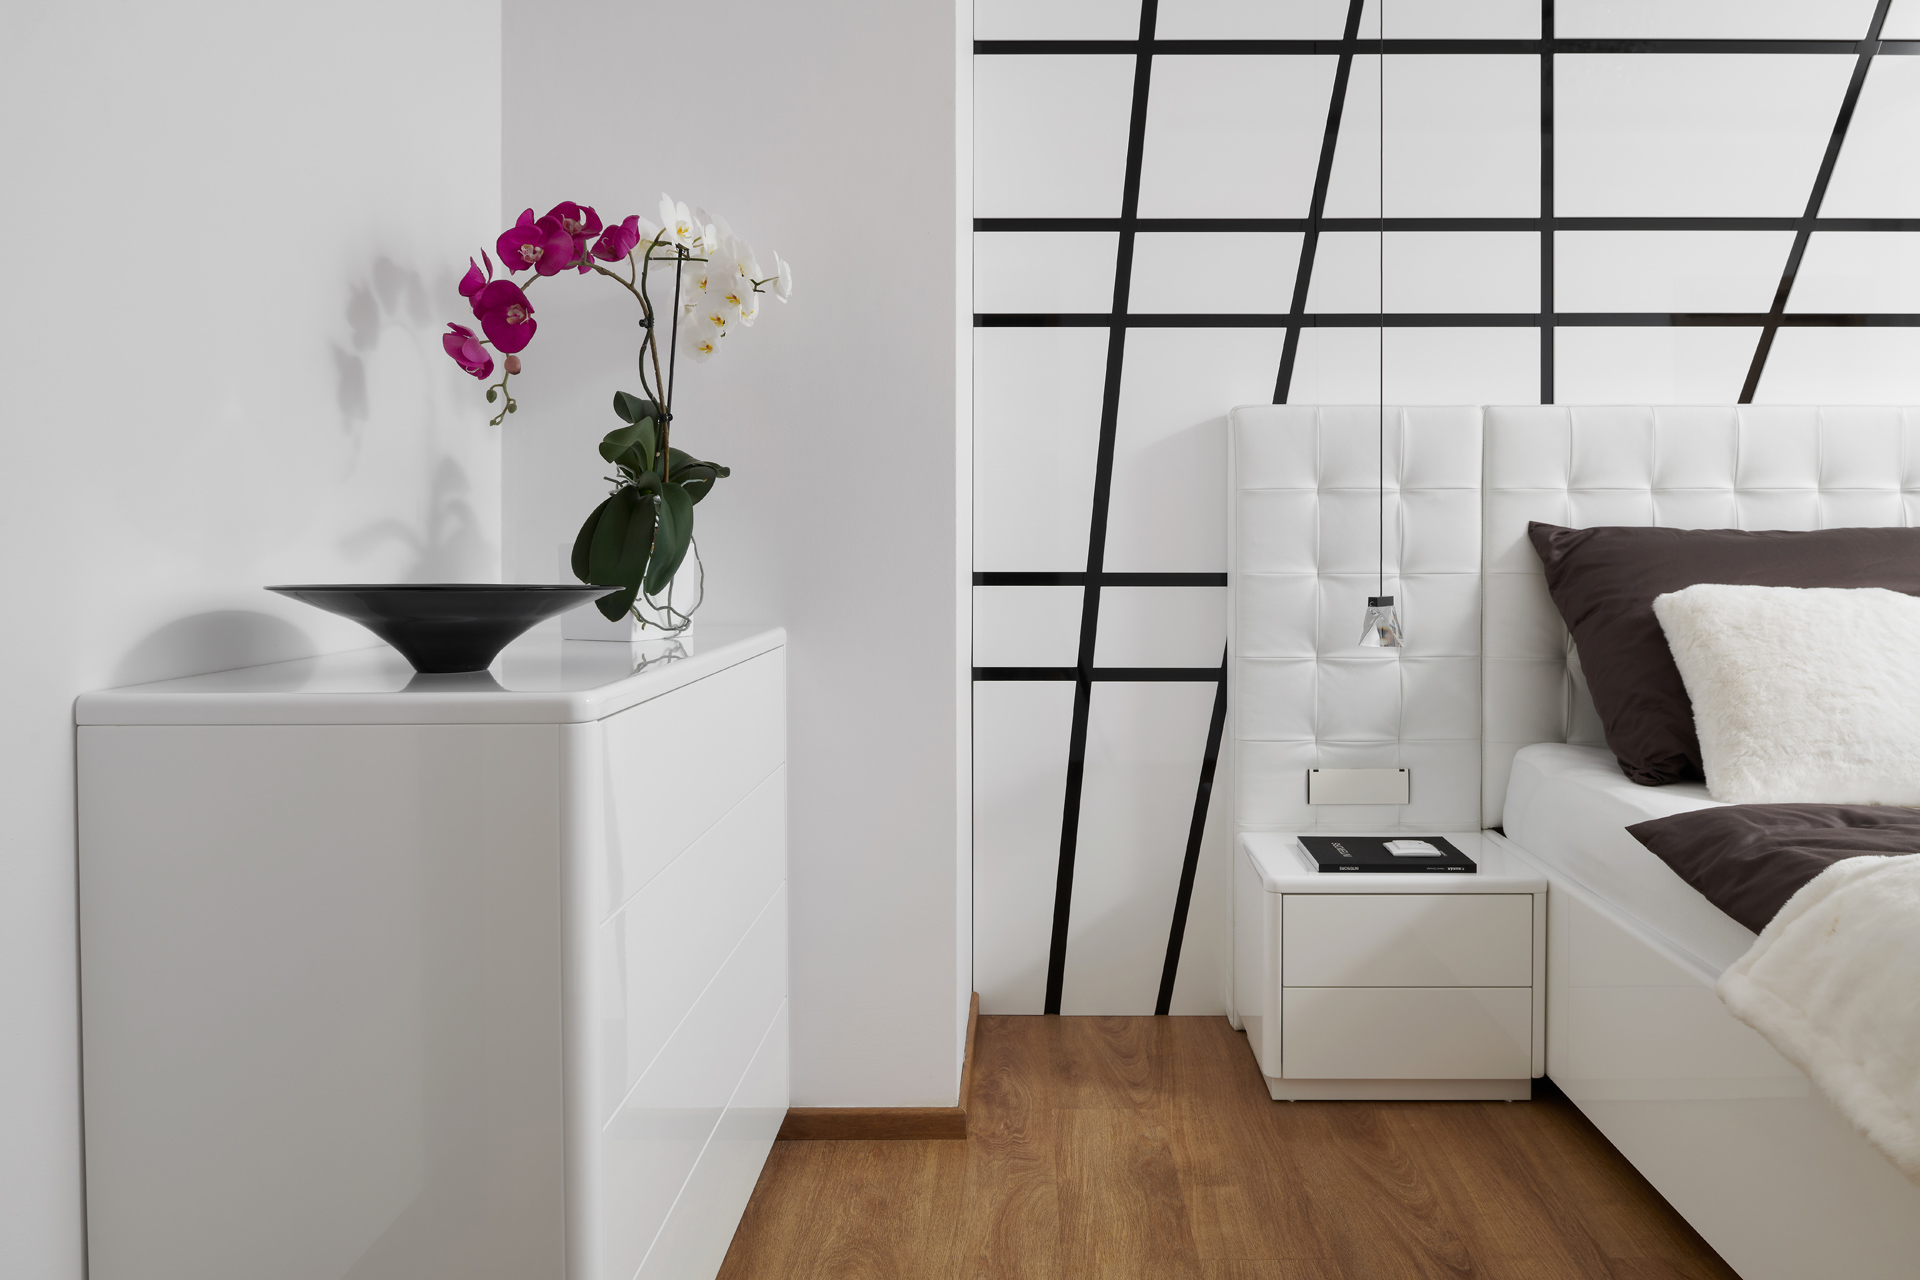 Hanak furniture Realization Bedroom